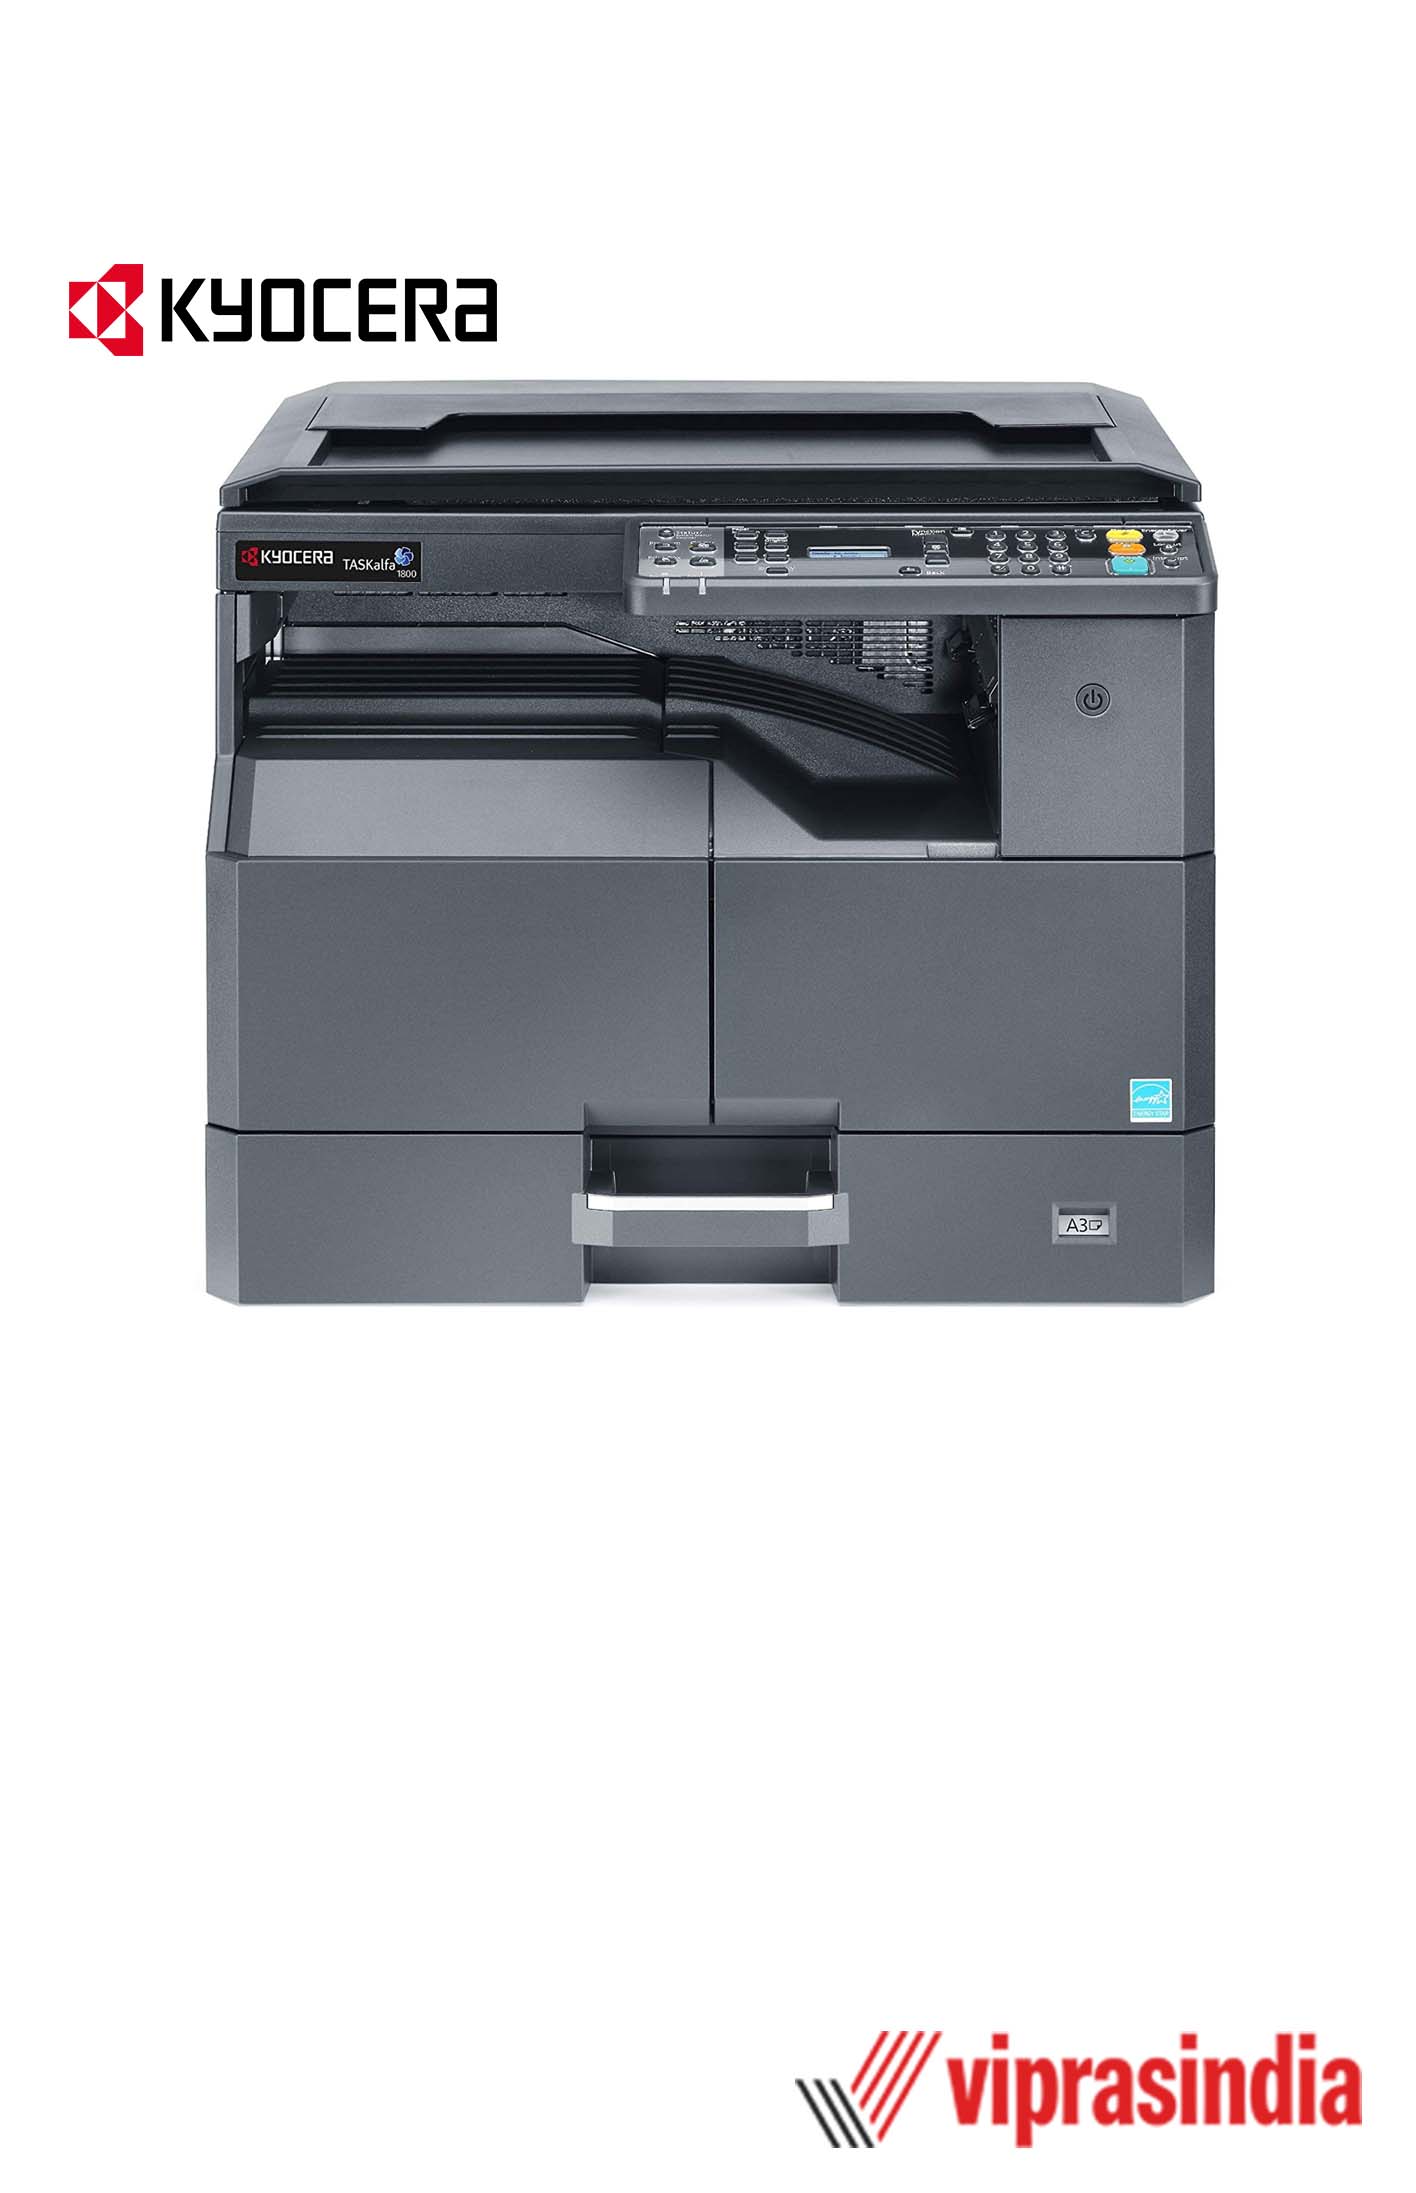 Printer Taskalfa Kyocera with Duplex 1800